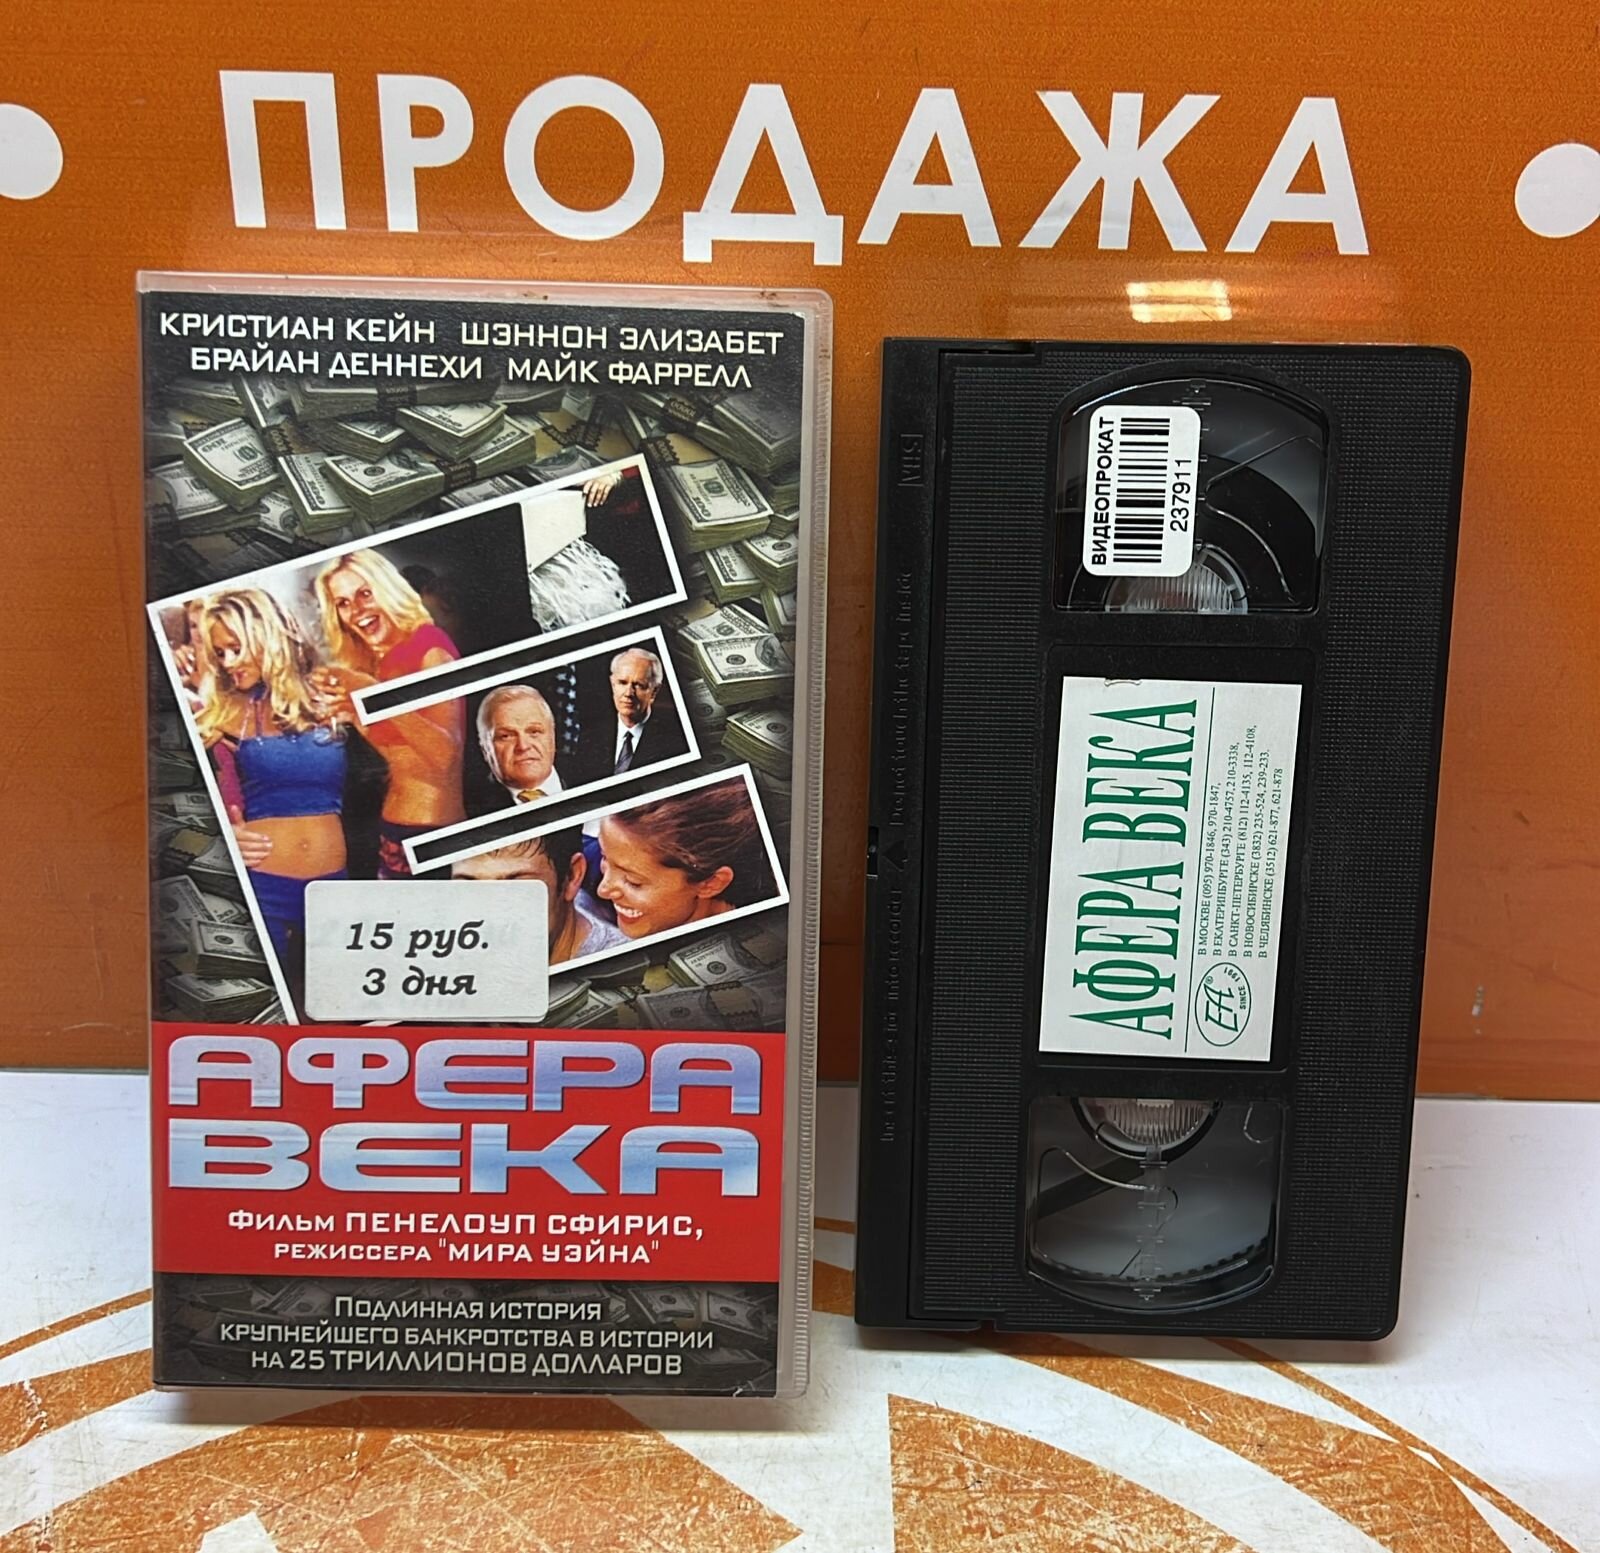 VHS-кассета "Афера века"